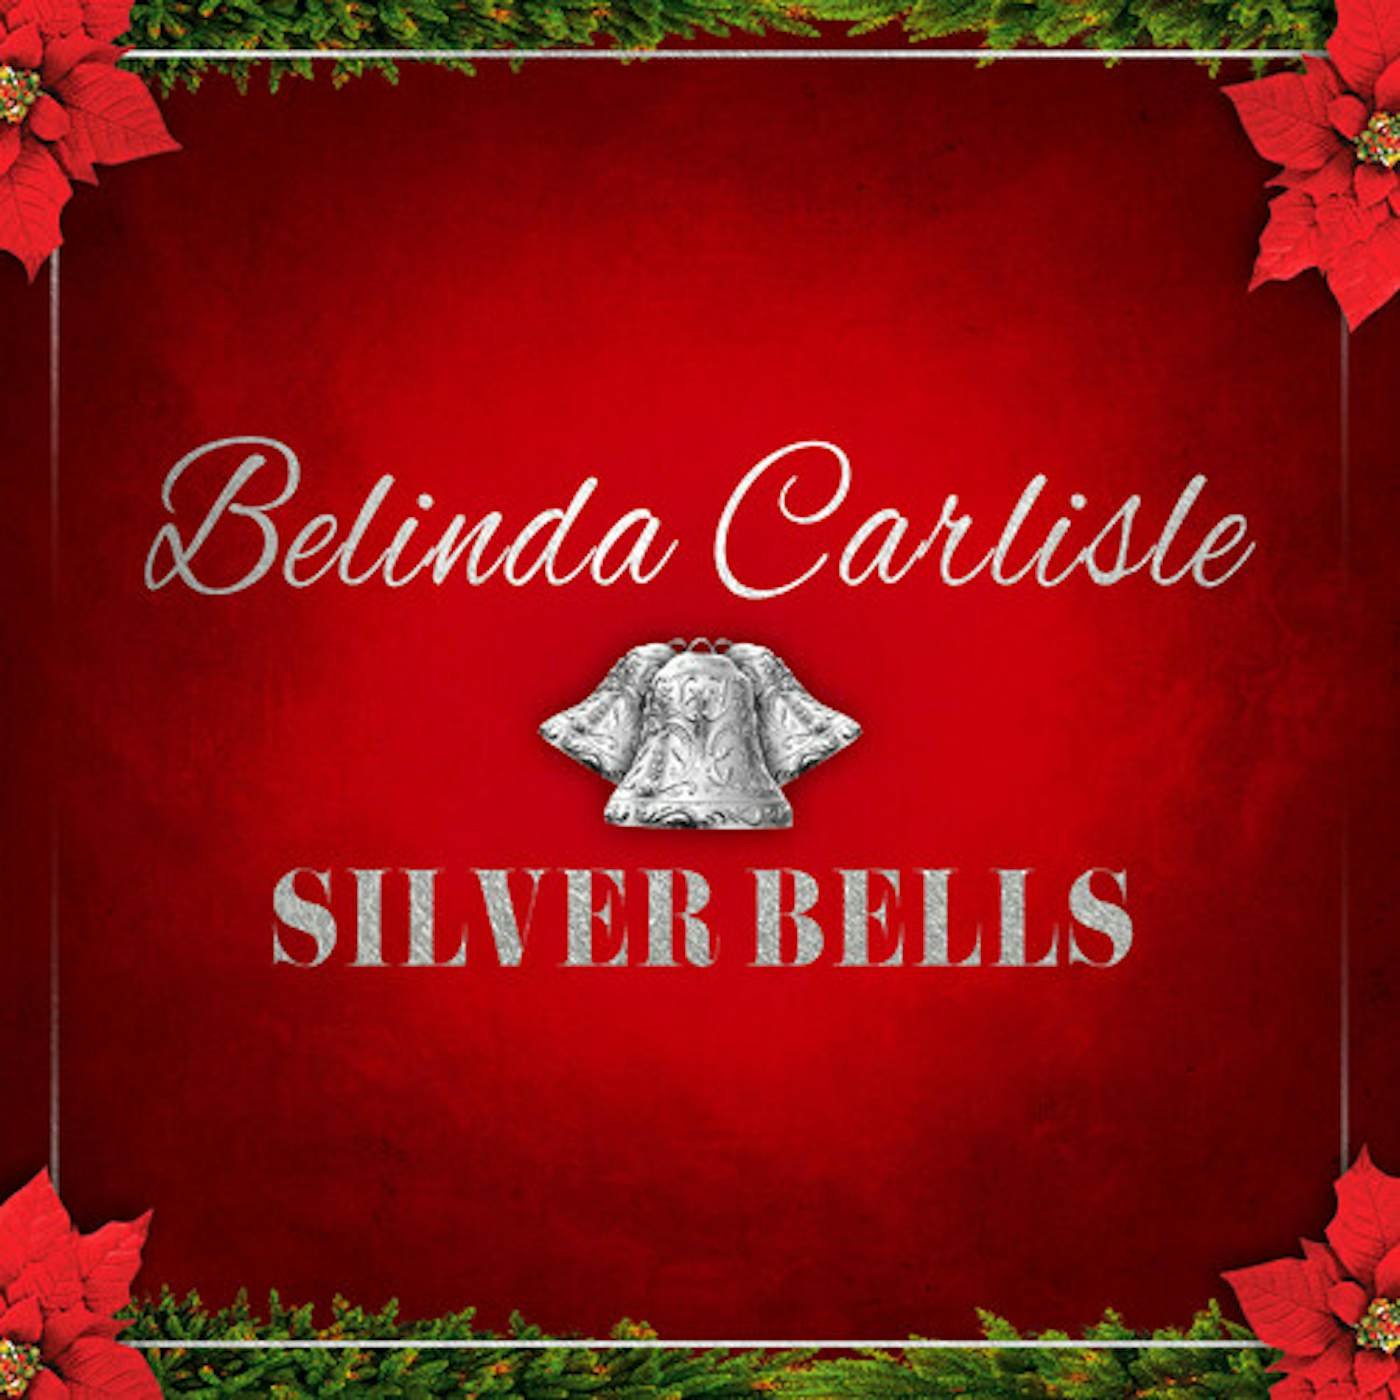 Belinda Carlisle SILVER BELLS - RED Vinyl Record